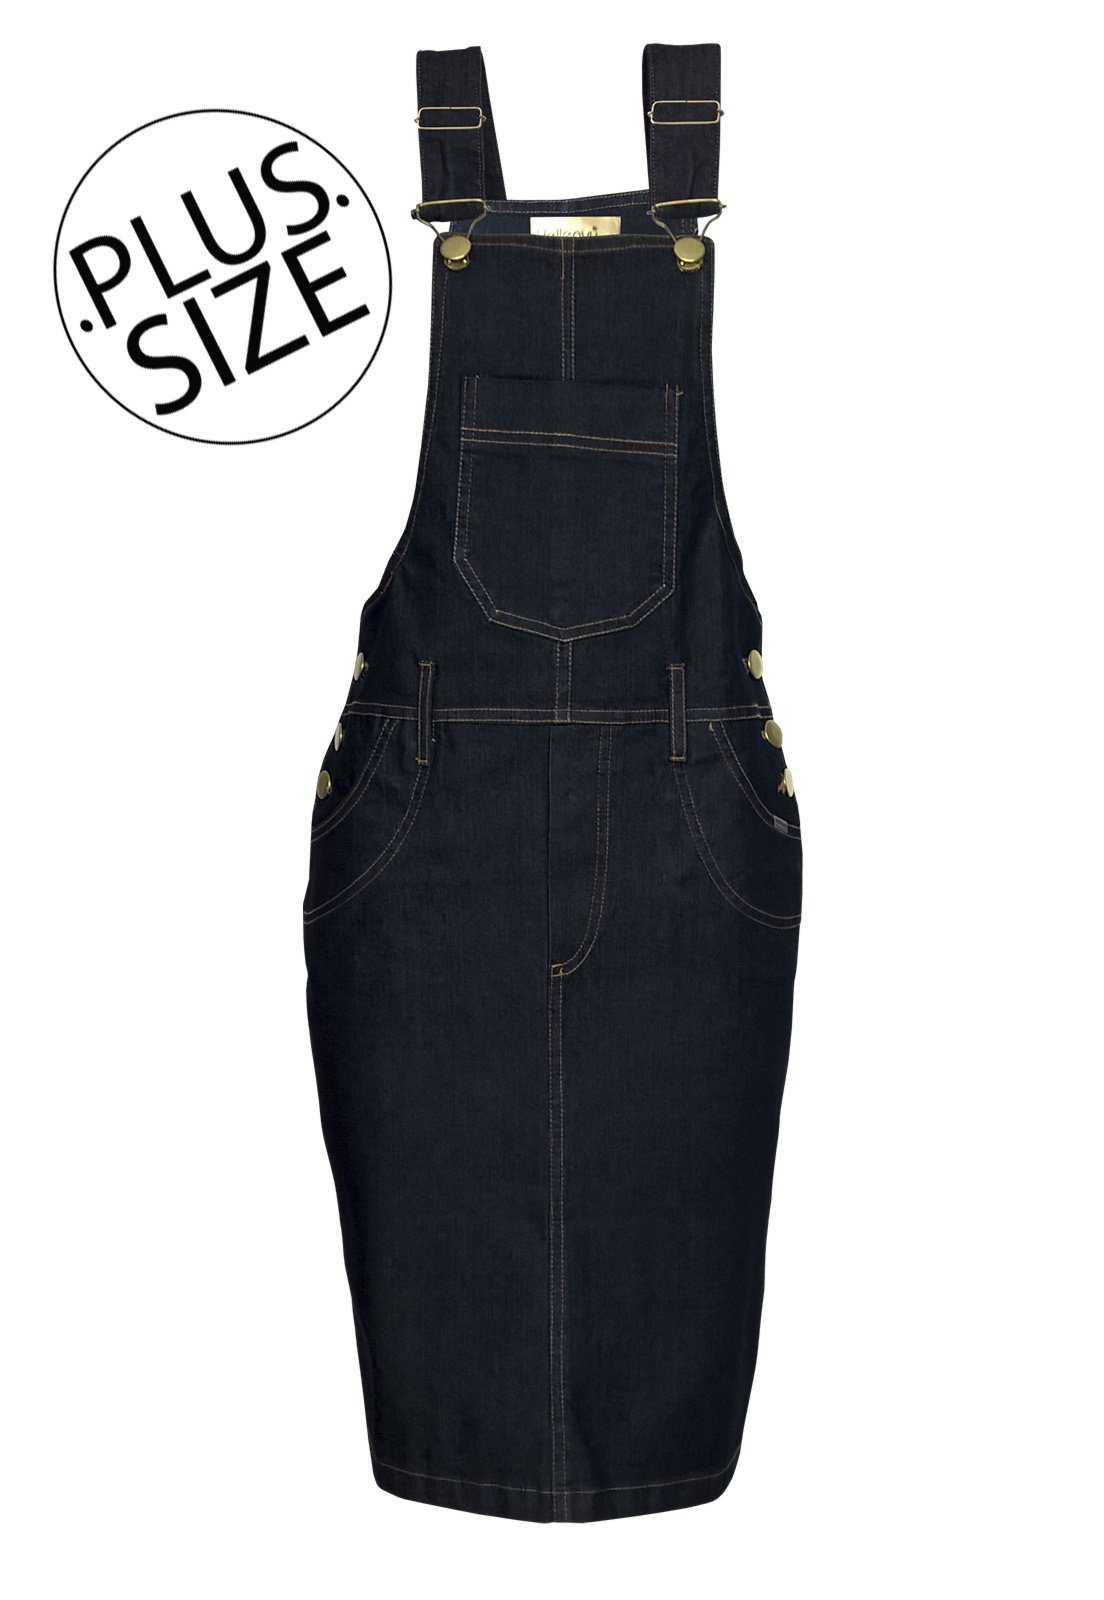 jardineira jeans sawary plus size feminina